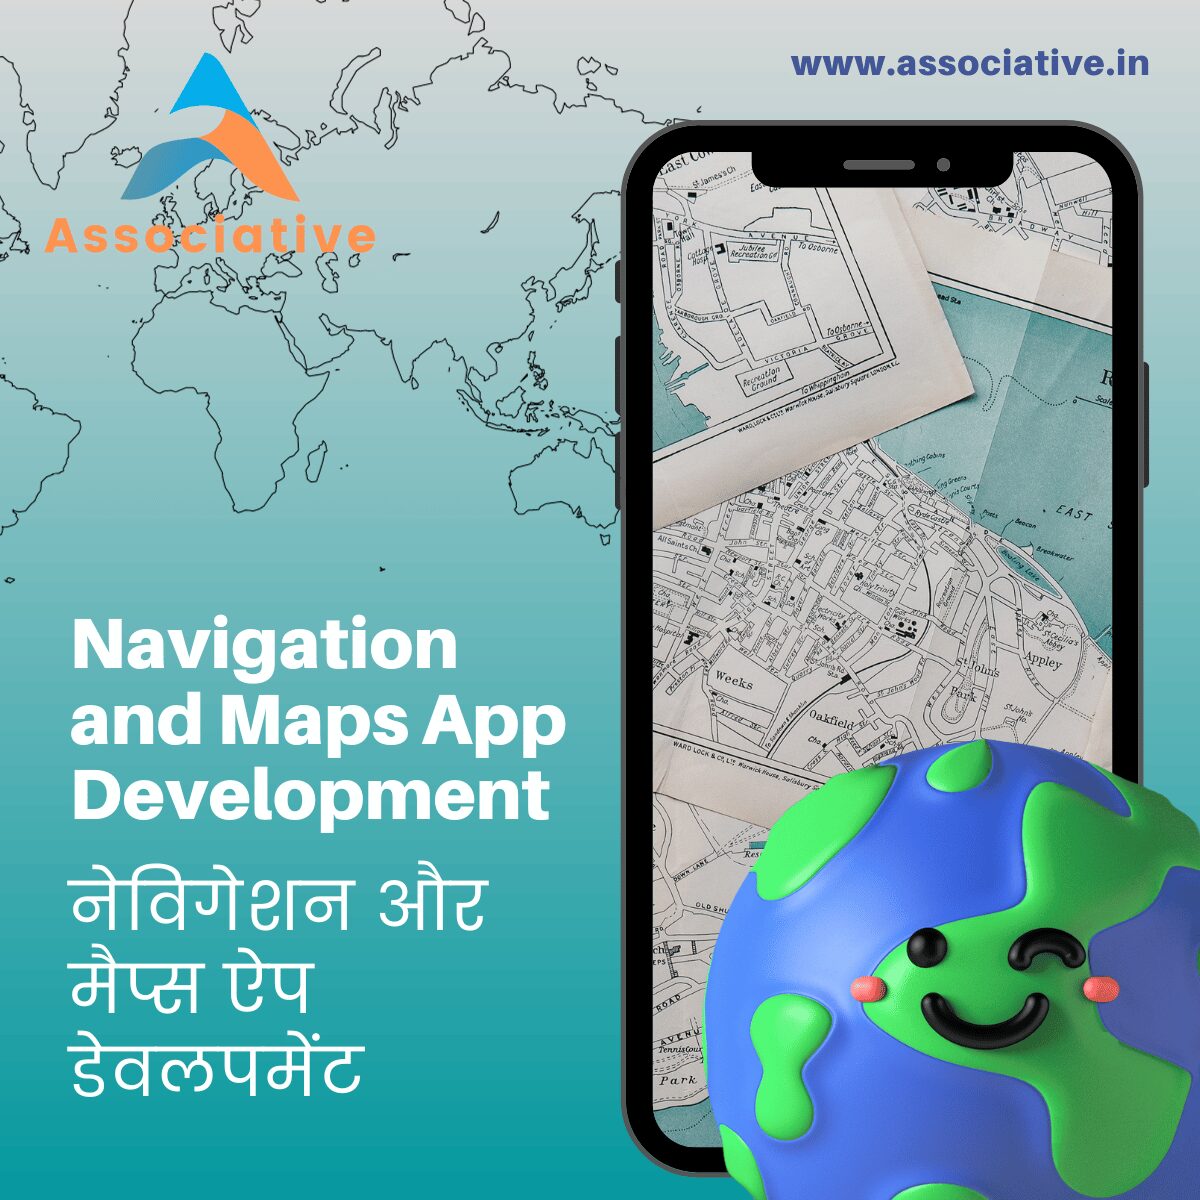 Navigation and Maps App Development नेविगेशन और मैप्स ऐप डेवलपमेंट